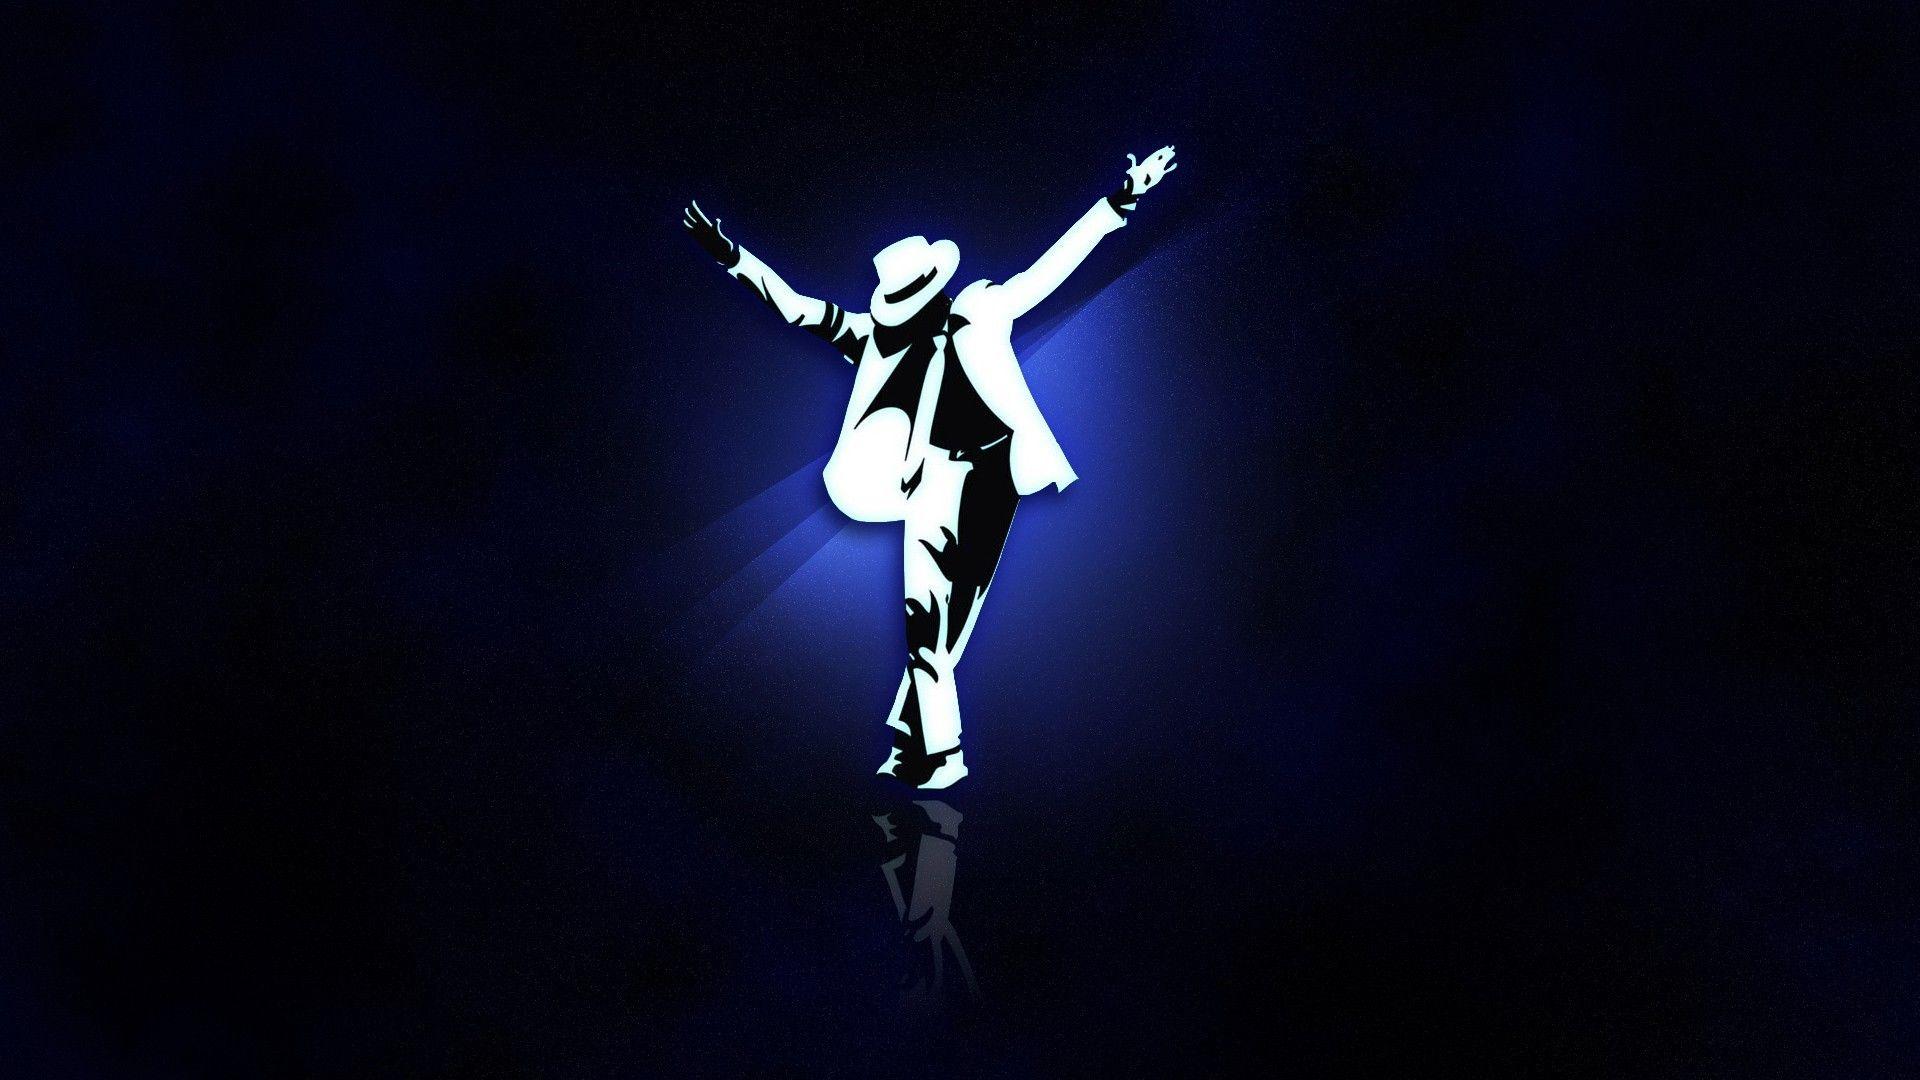 image Michael Jackson Wallpaper HD. Gianni. Michael